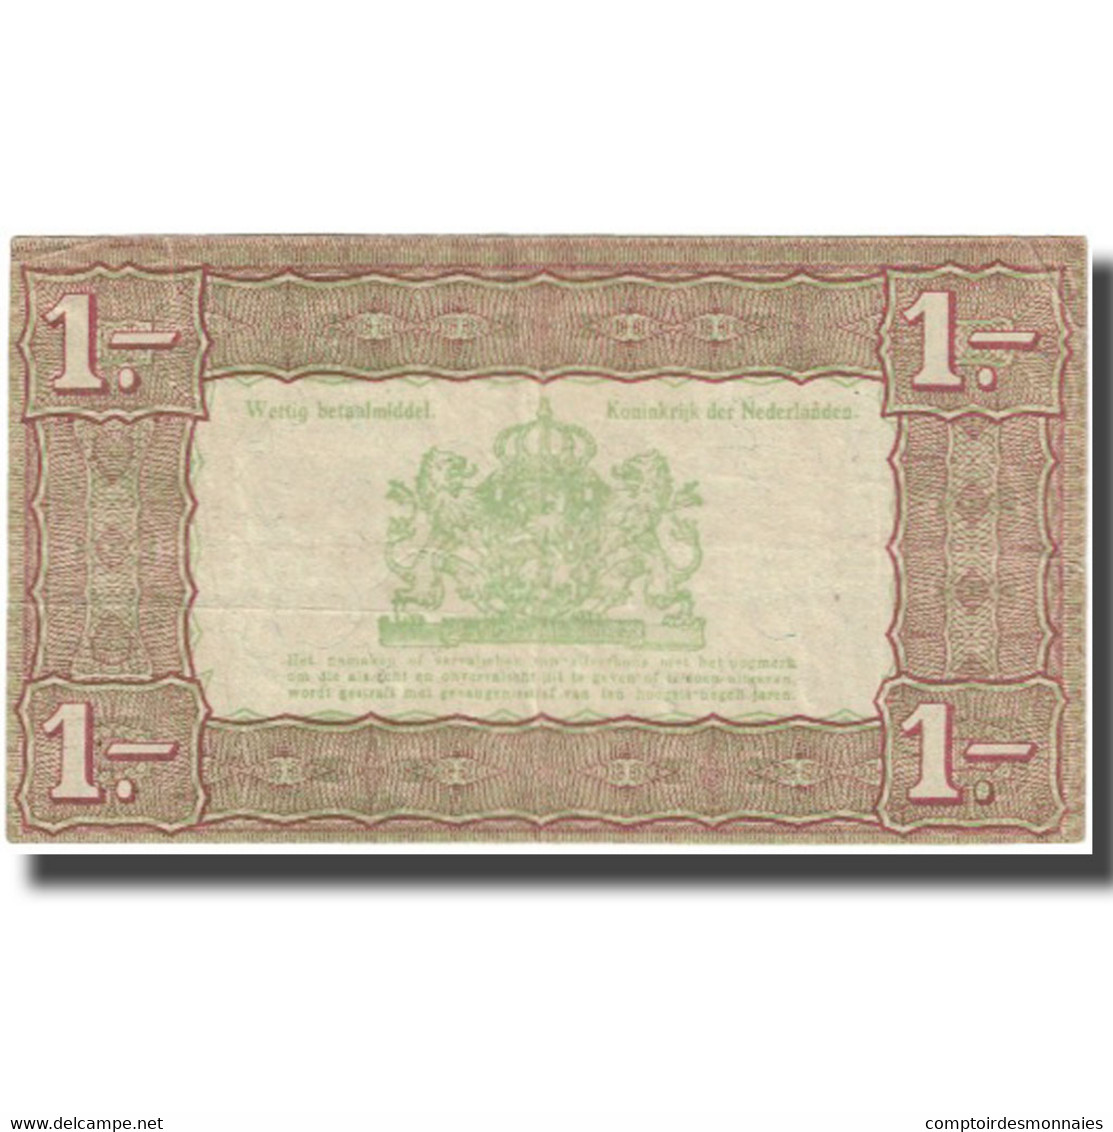 Billet, Pays-Bas, 1 Gulden, 1938, 1938-10-01, KM:61, TB - [3] Emissionen Des Ministerie Van Oorlog